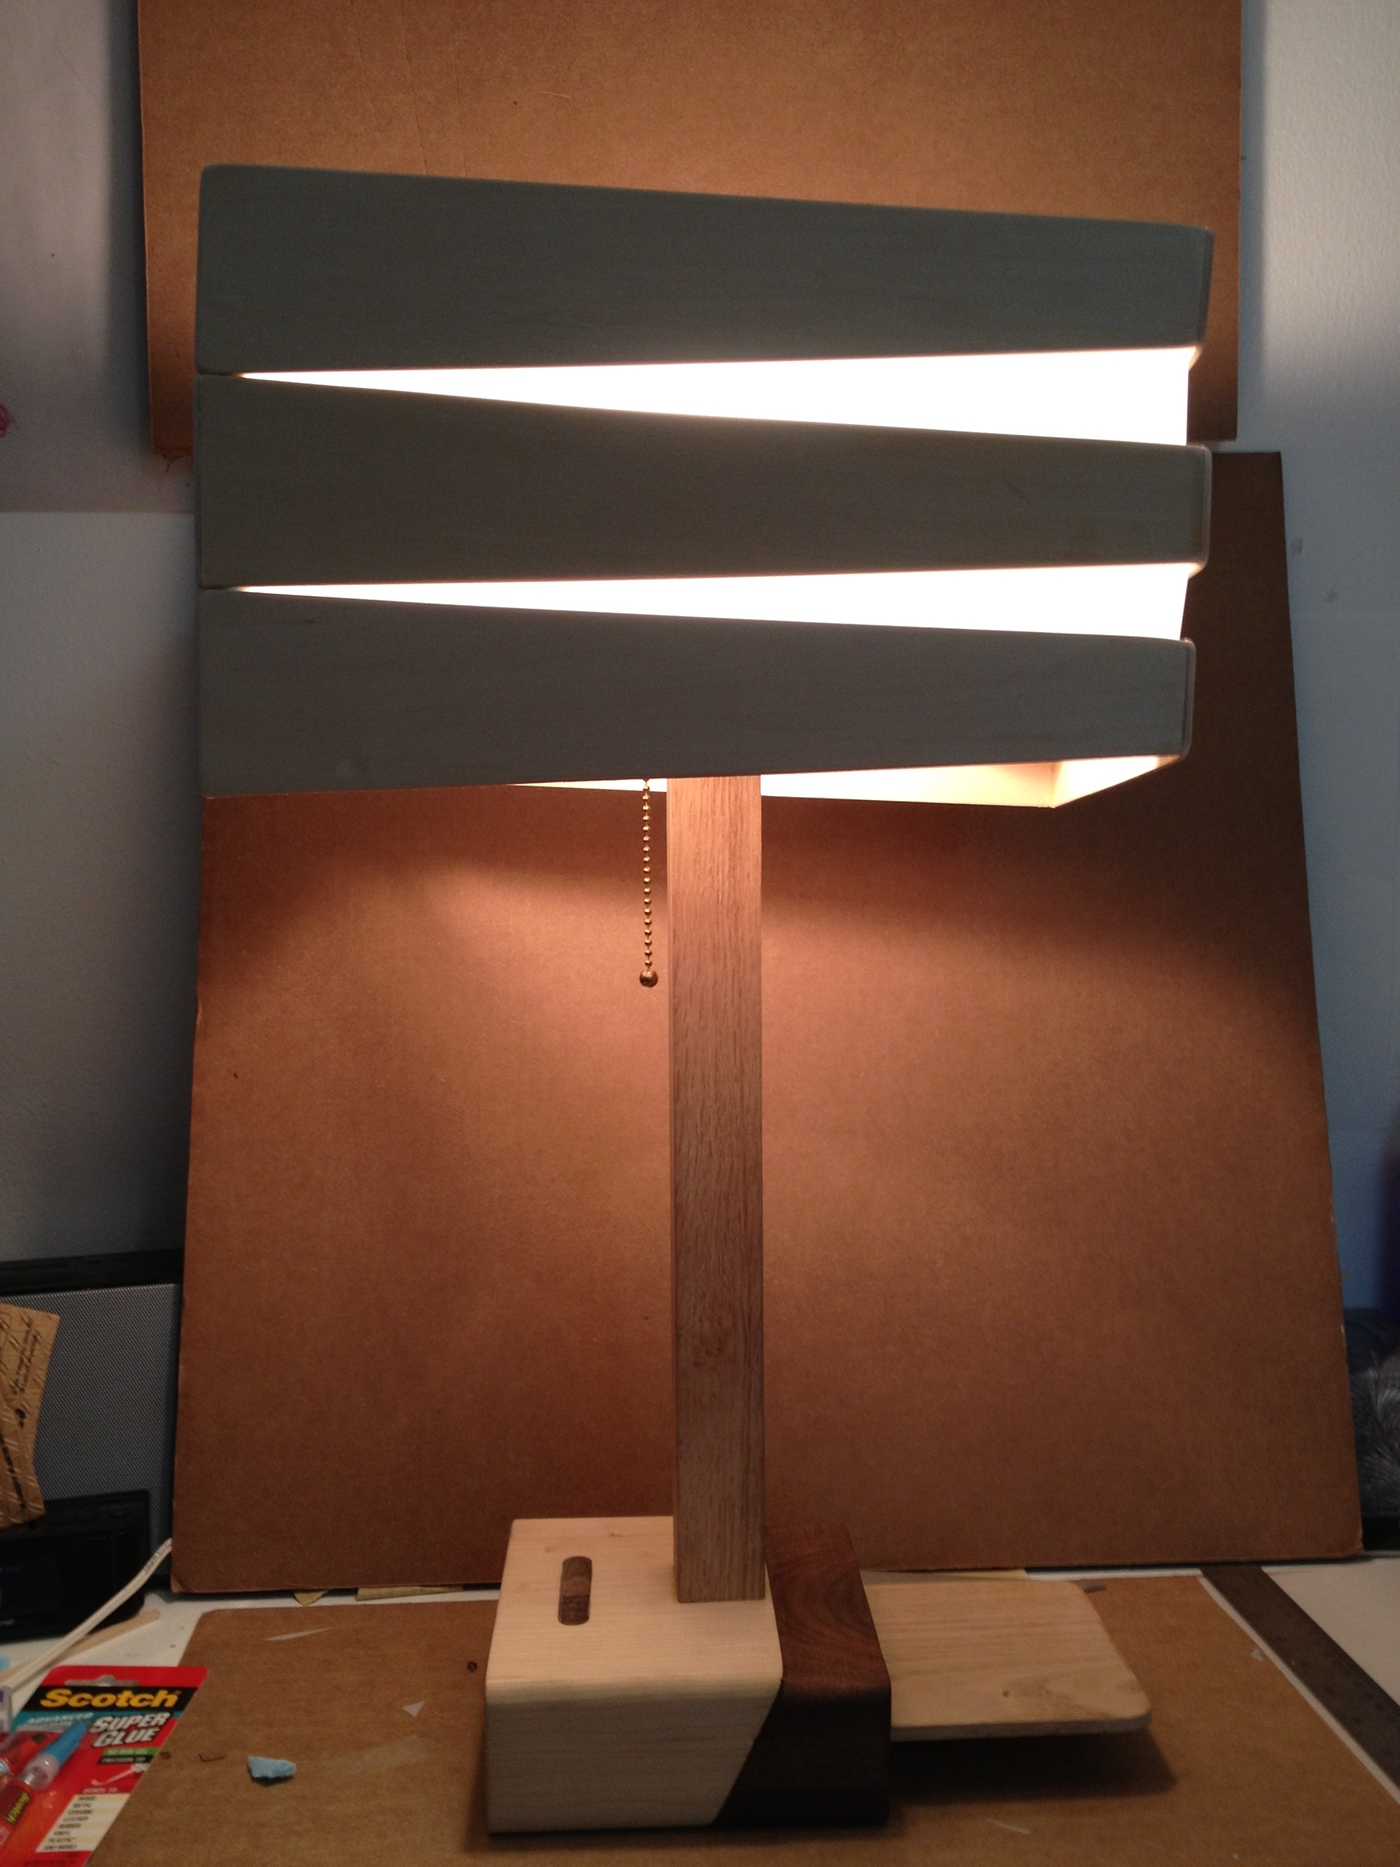 Lamp wooden walnut cherry oak design funituredesign furniture illumination productdesign illuminationdesign SCAD